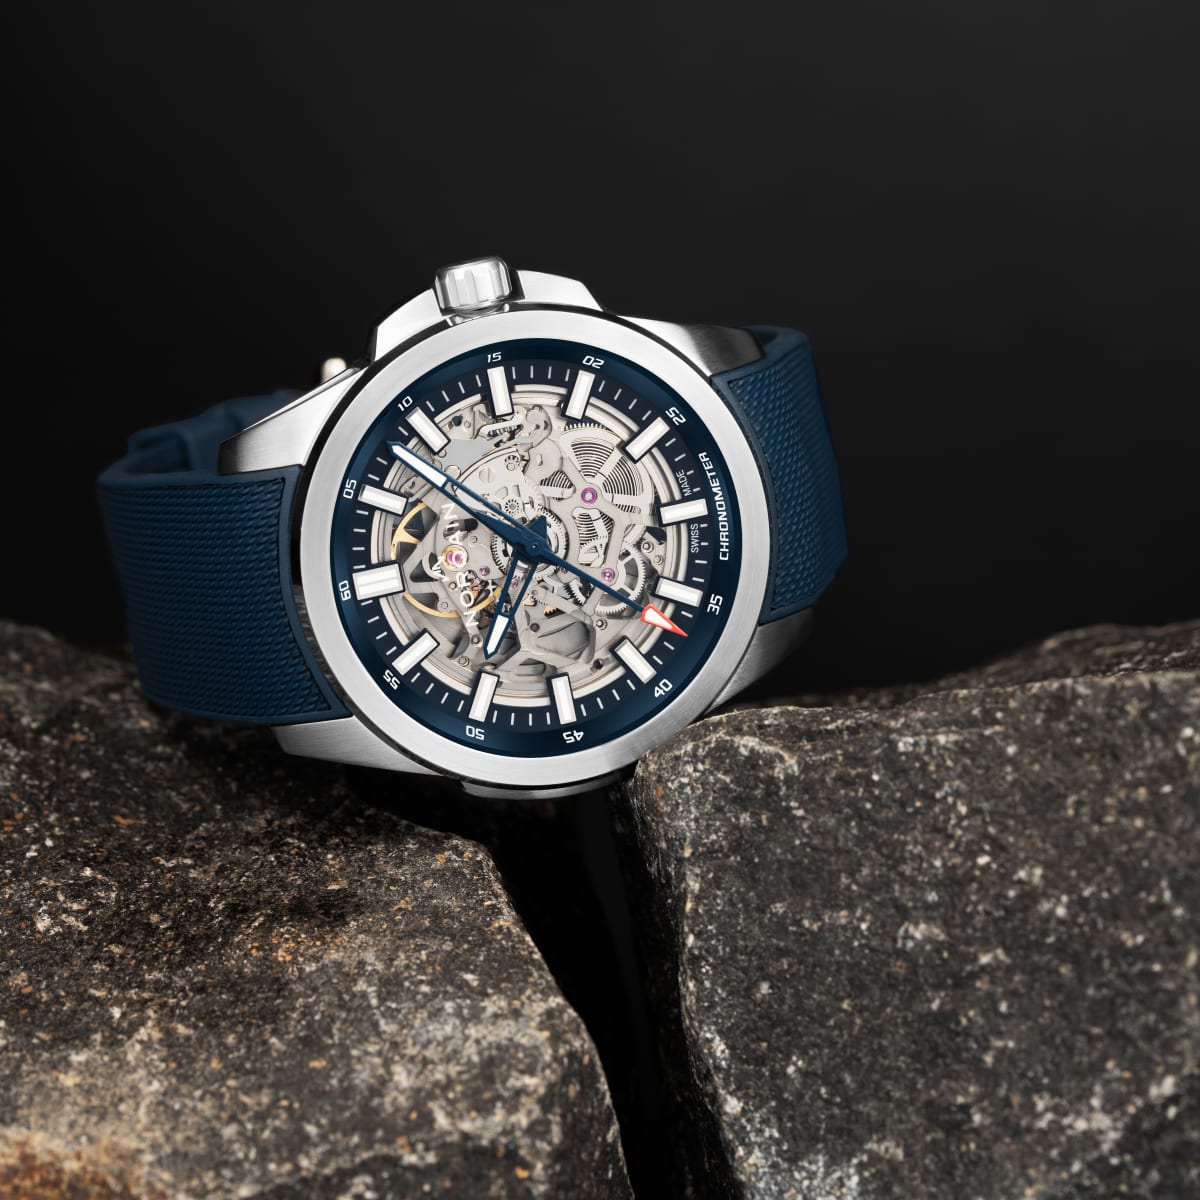 Rolex Watches for Women: Wearing Men's Watches - Bob's Watches